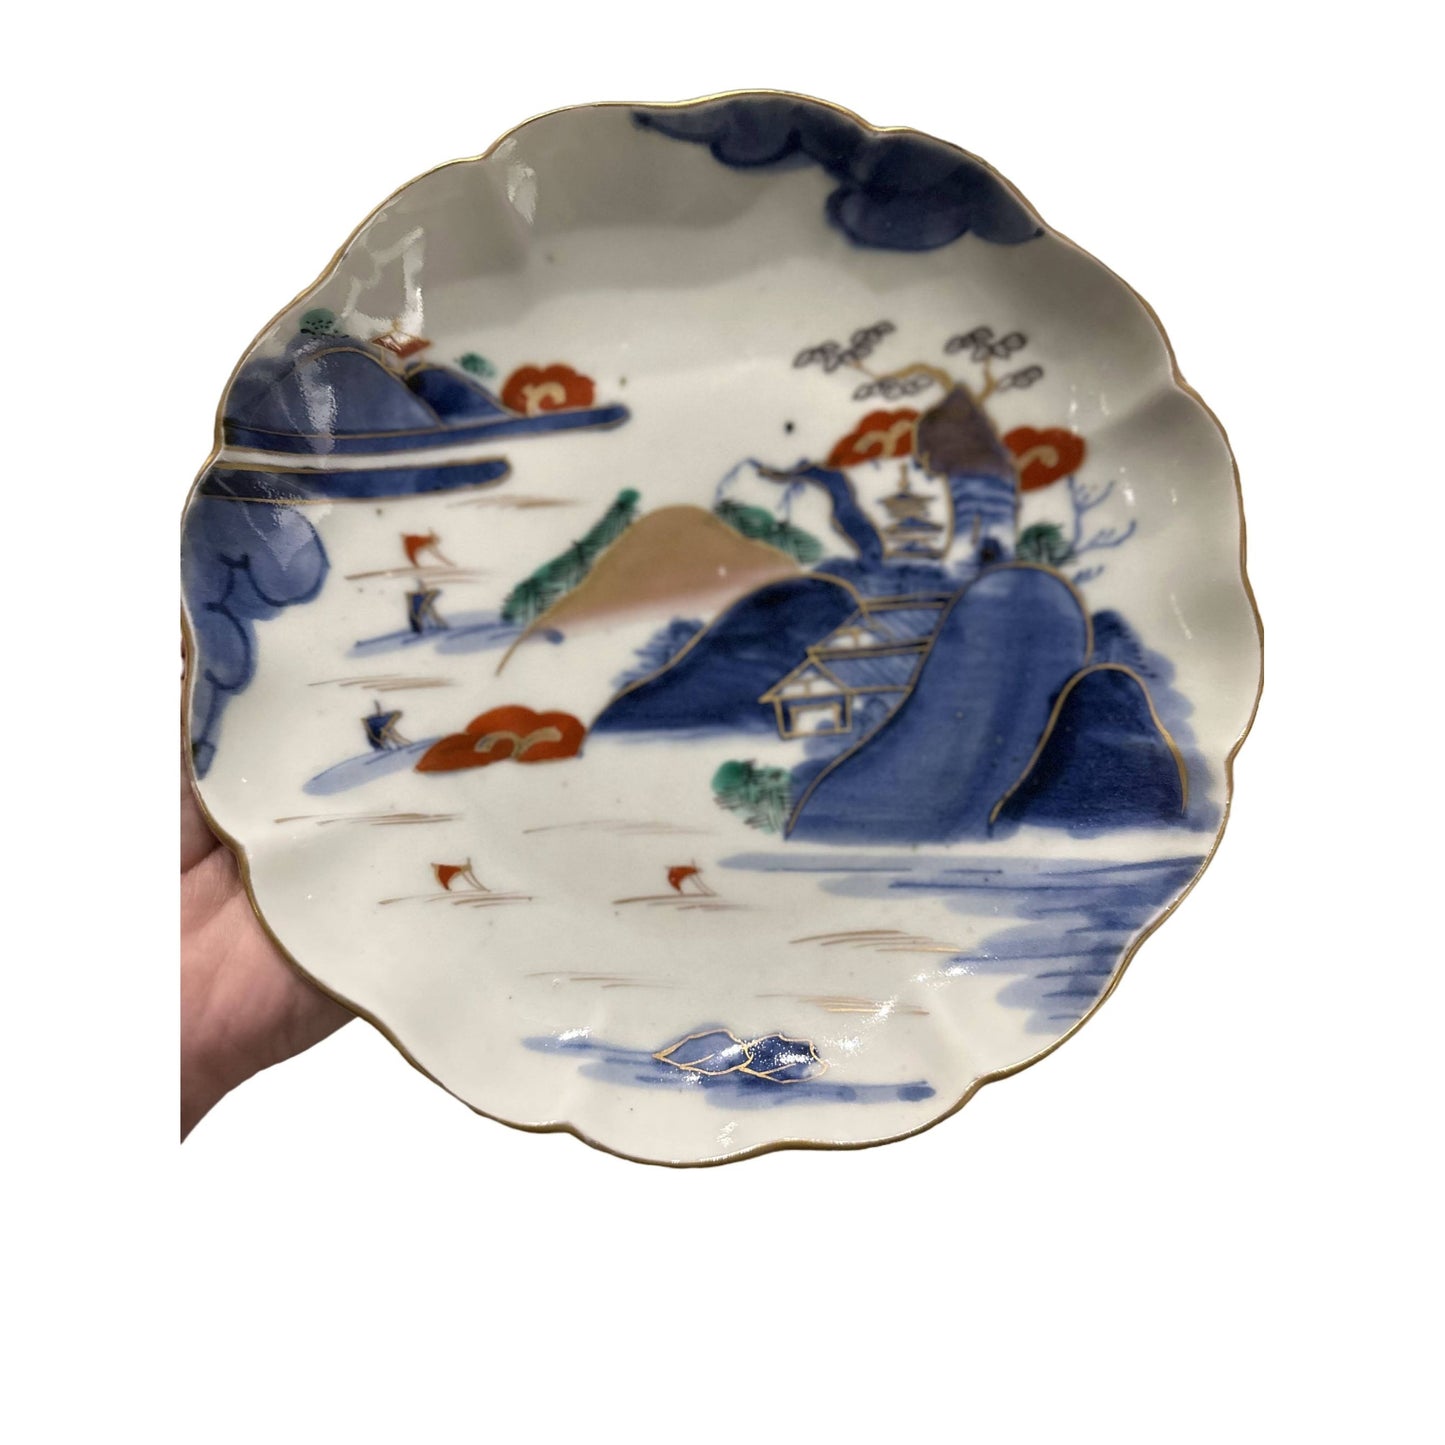 Antique 19th Century Japanese Porcelain Decorative Plate Exquisite Hand-Painted